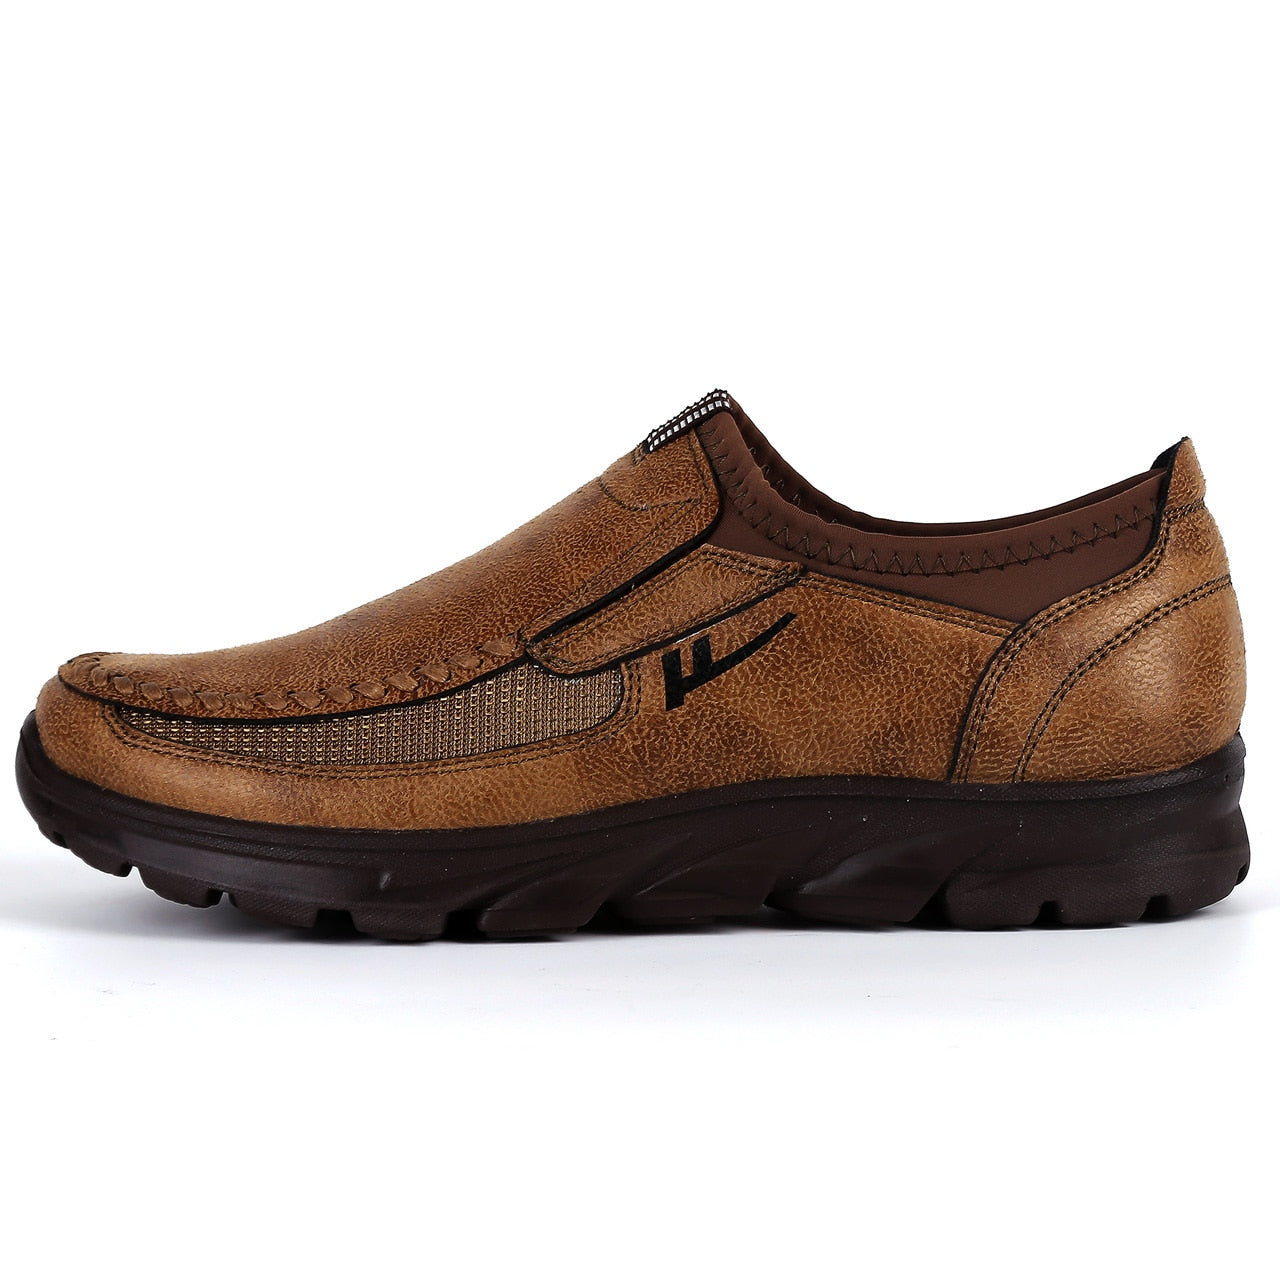 ZUNYU New Trademark Size 38-47 Upscale Men Casual Shoes Fashion Leather Shoes For Men Summer Men&#39;S Flat Shoes Dropshipping